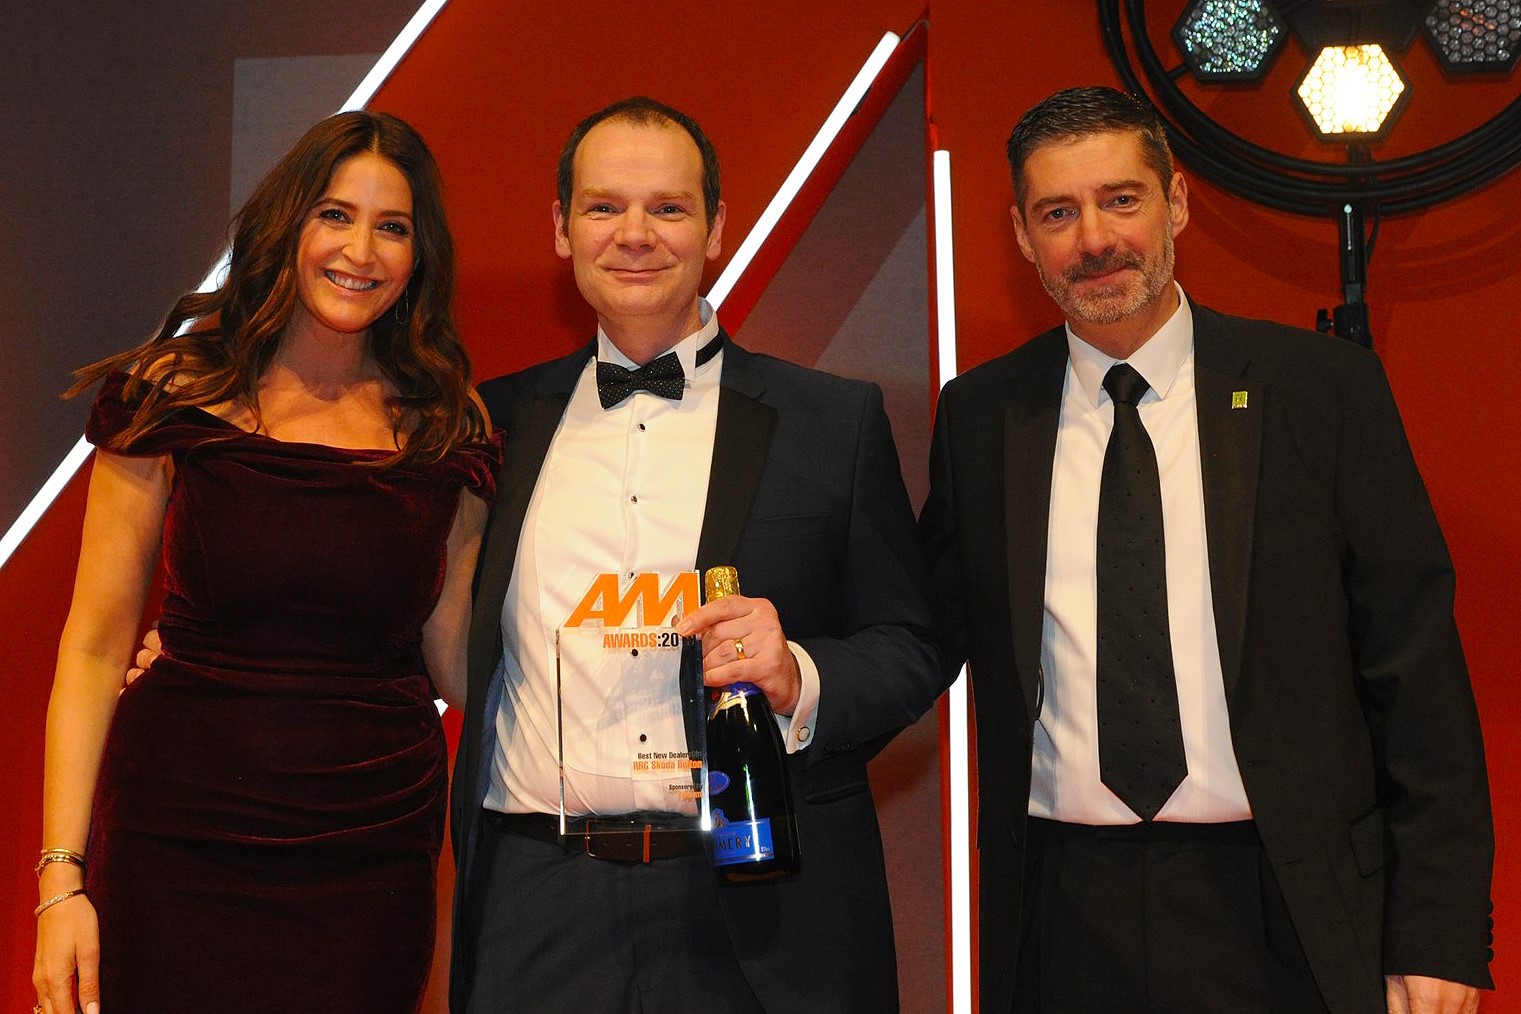 Arran Bangham, group vice-chairman,  RRG Škoda, accepts the award from Darren  Preddy, director – dealer sales, Rapid RTC, right and host Lisa Snowdon, left